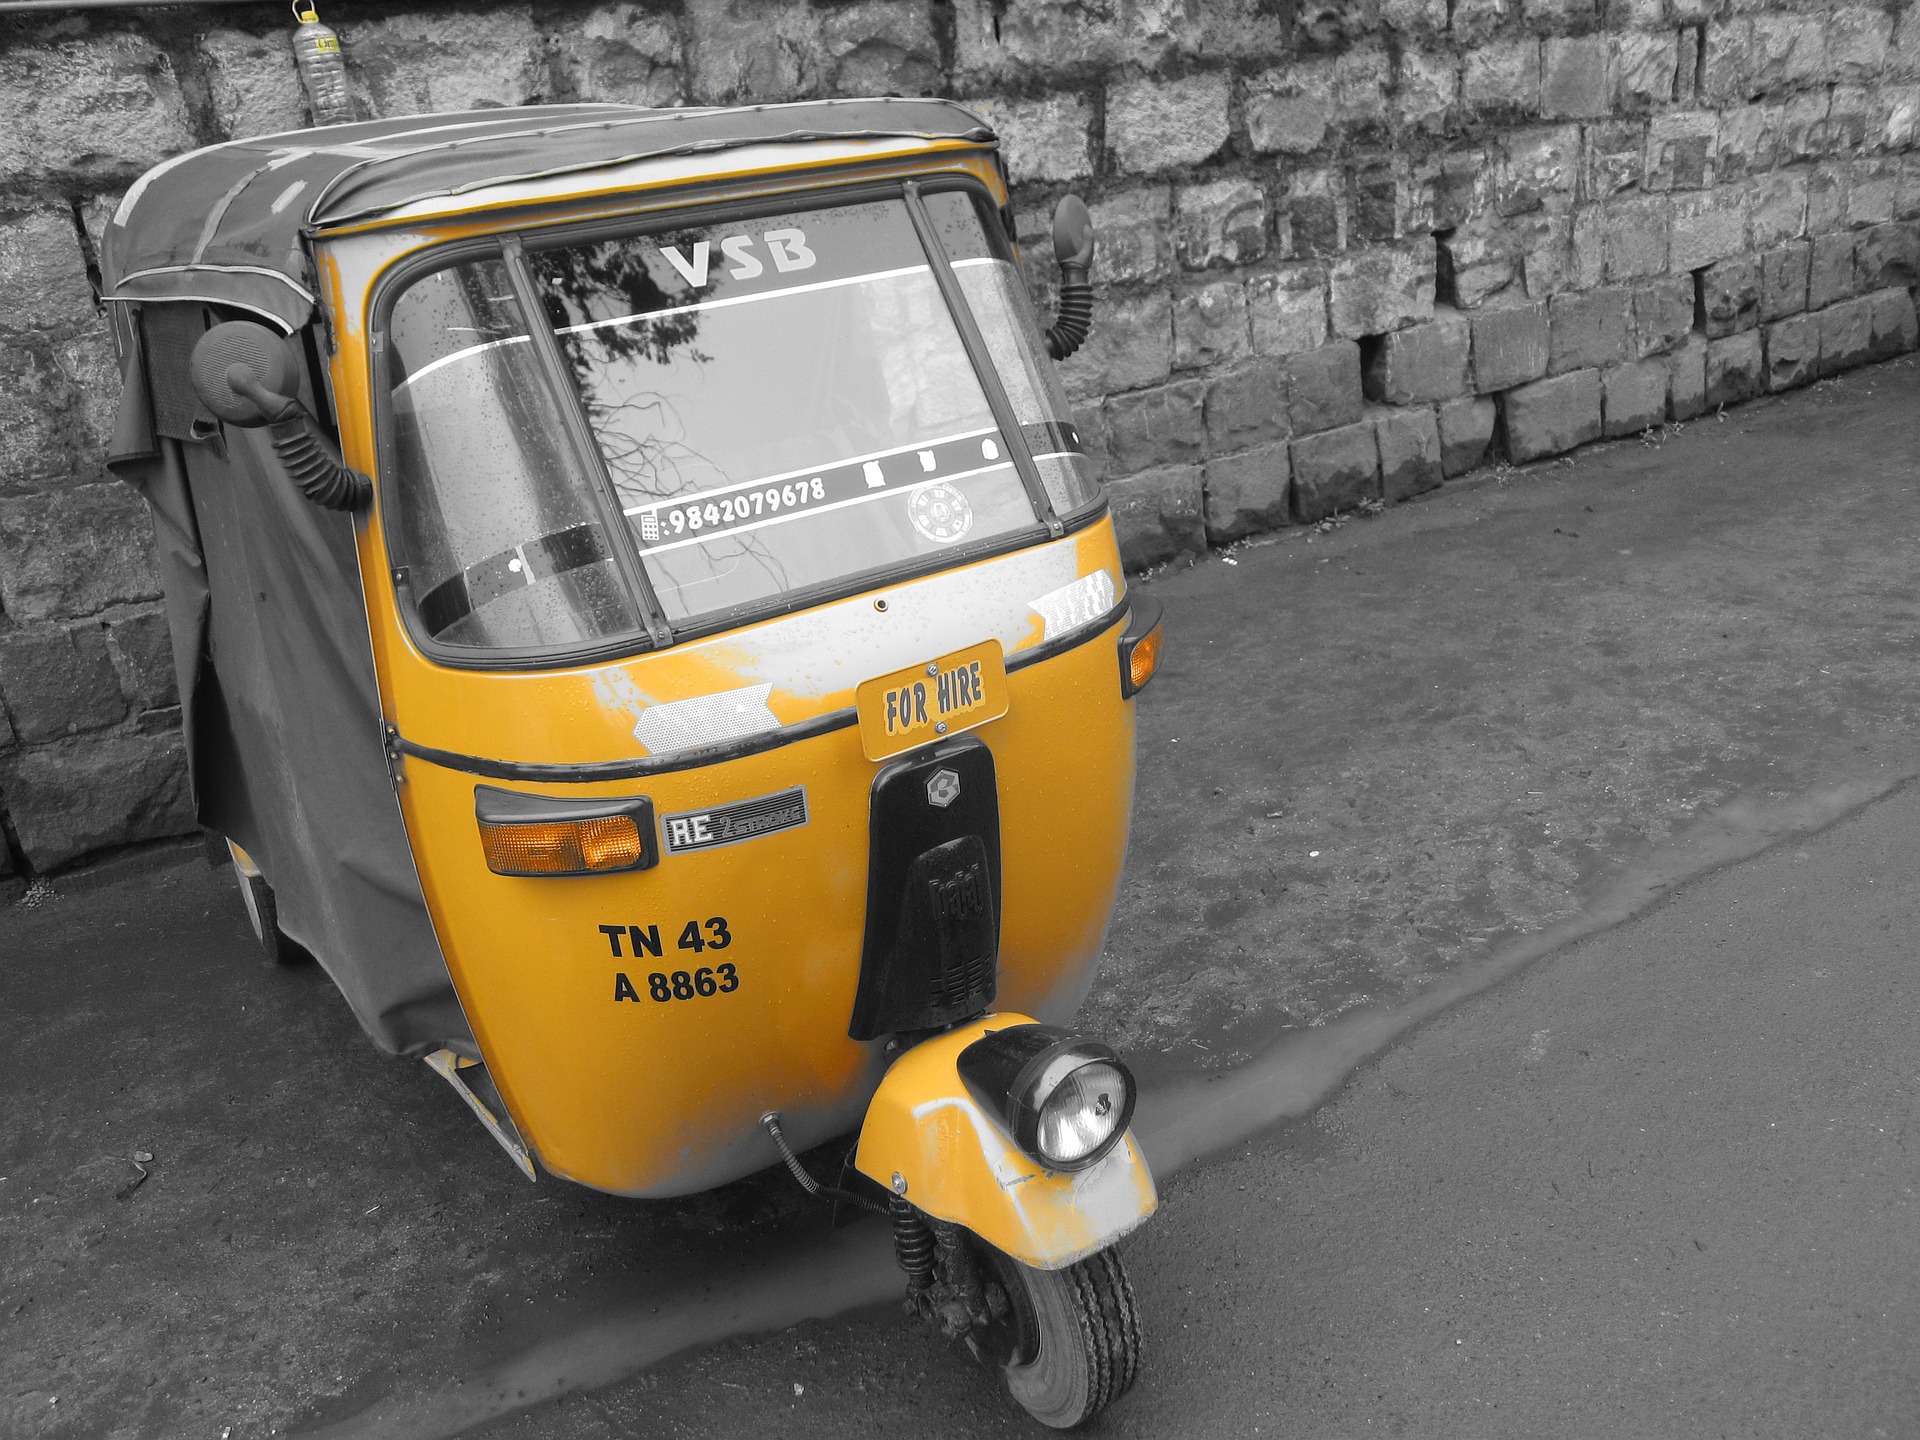 image: a yellow auto-rickshaw with a reflective winshield